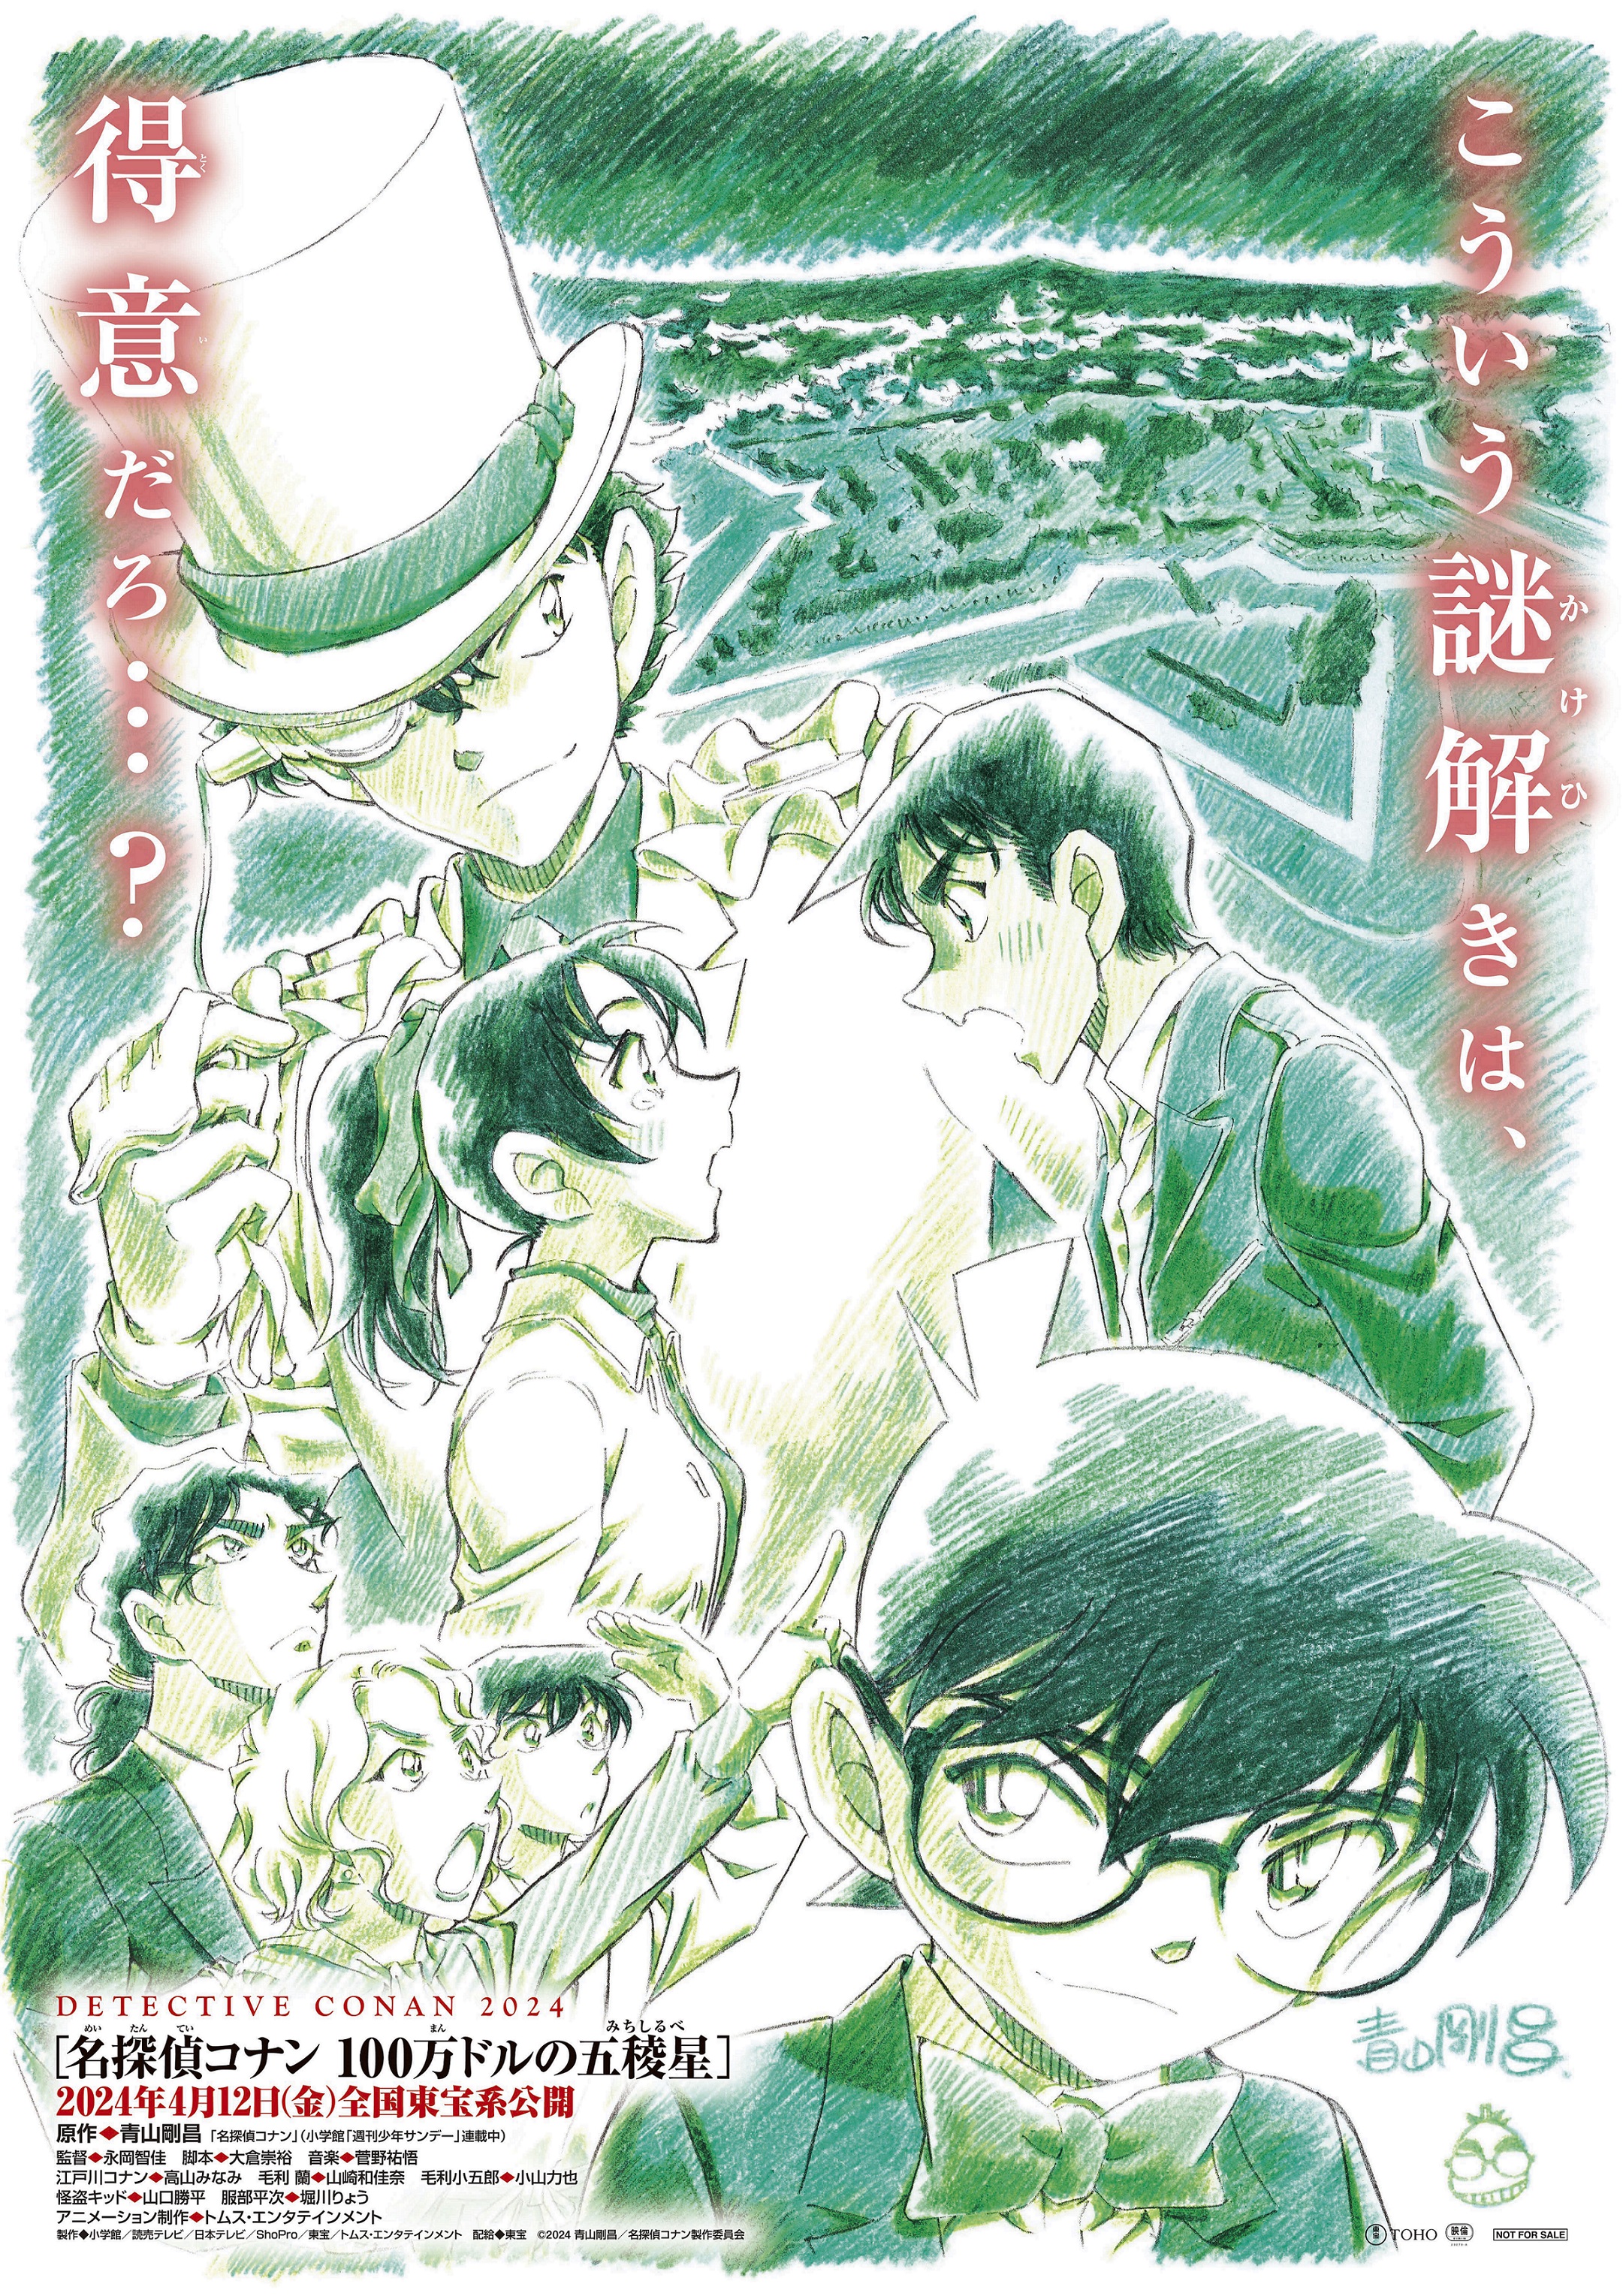 Toho Announces Title of 27th Detective Conan Movie: “Detective Conan 100” and 30th Anniversary Exhibition Announcement